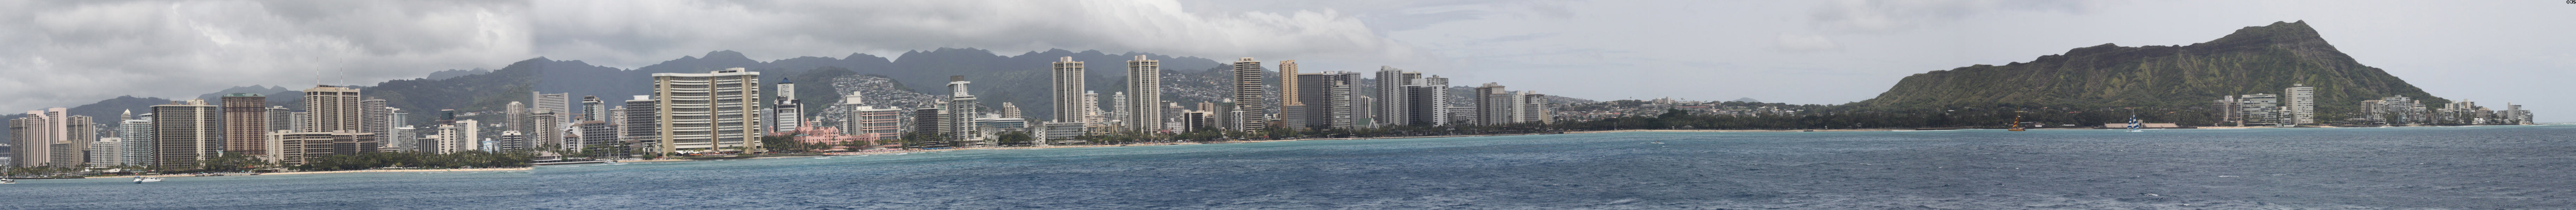 Panorama of Waikiki from Prince Hotel to Diamond Head volcanic cone. Waikiki, HI.